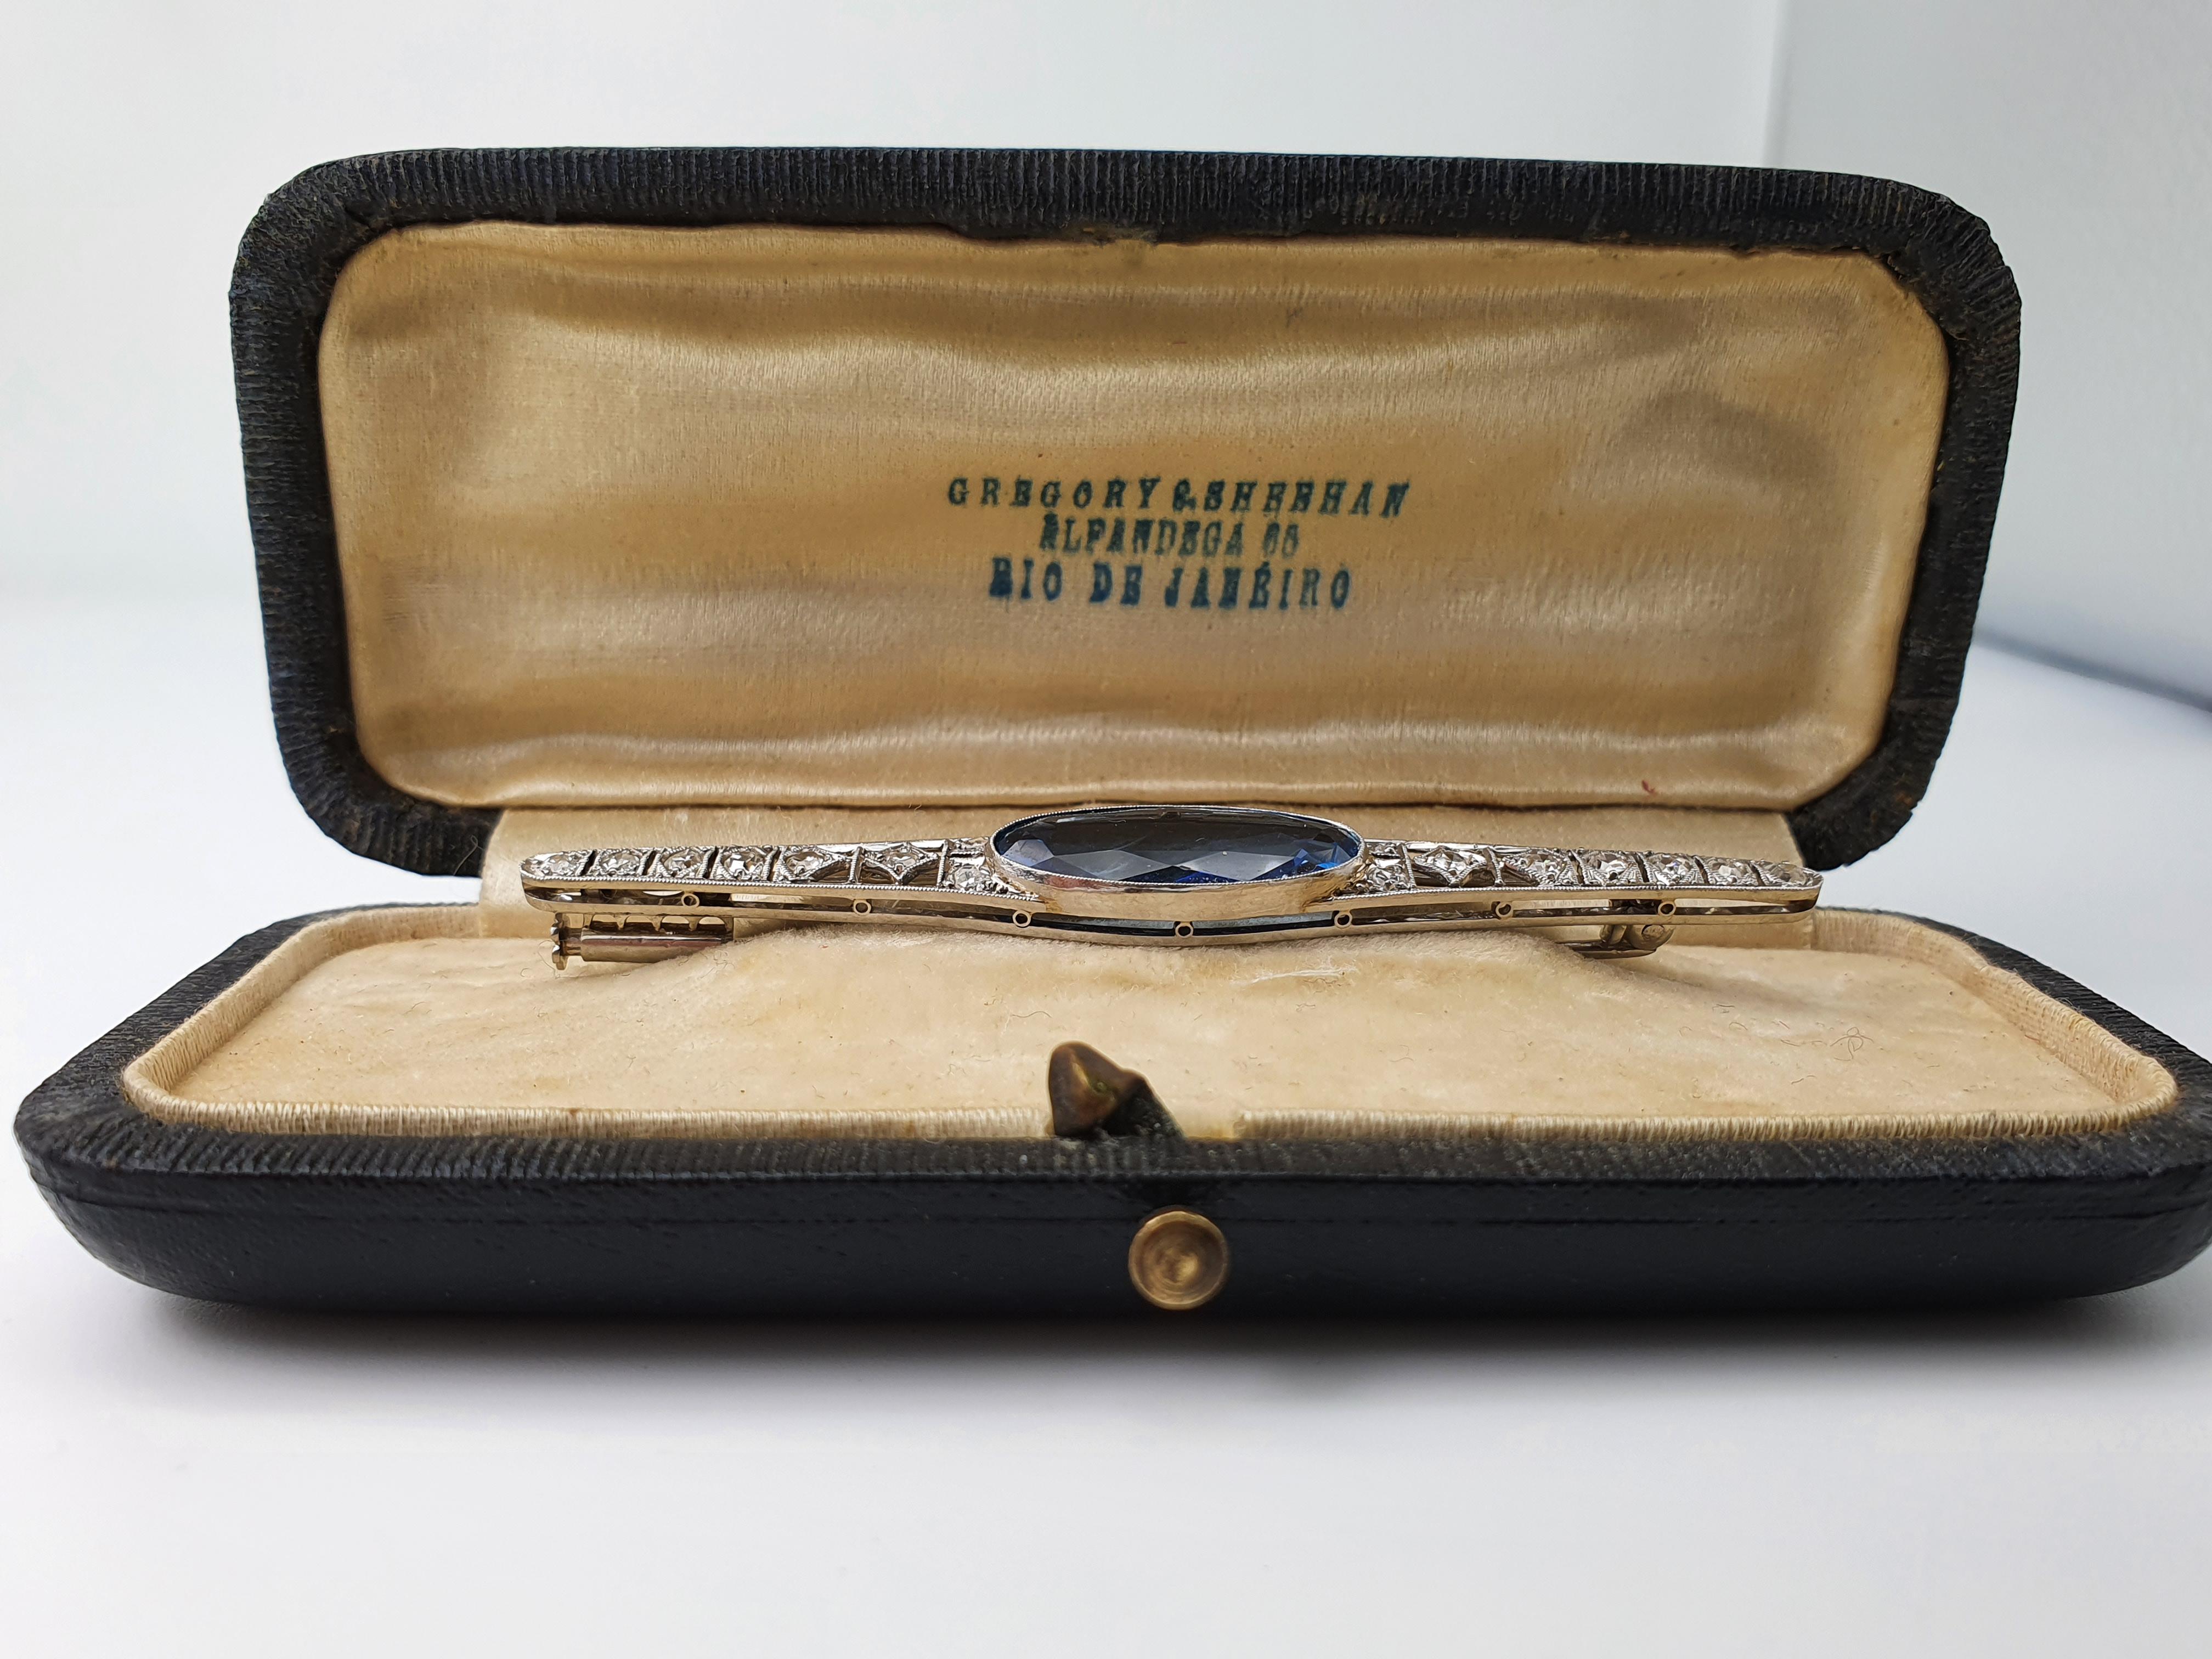 Antique: (c1930) Art Deco Platinum; Diamonds Iolite Brooch by Gregory Sheenan In Excellent Condition For Sale In Edinburgh, GB